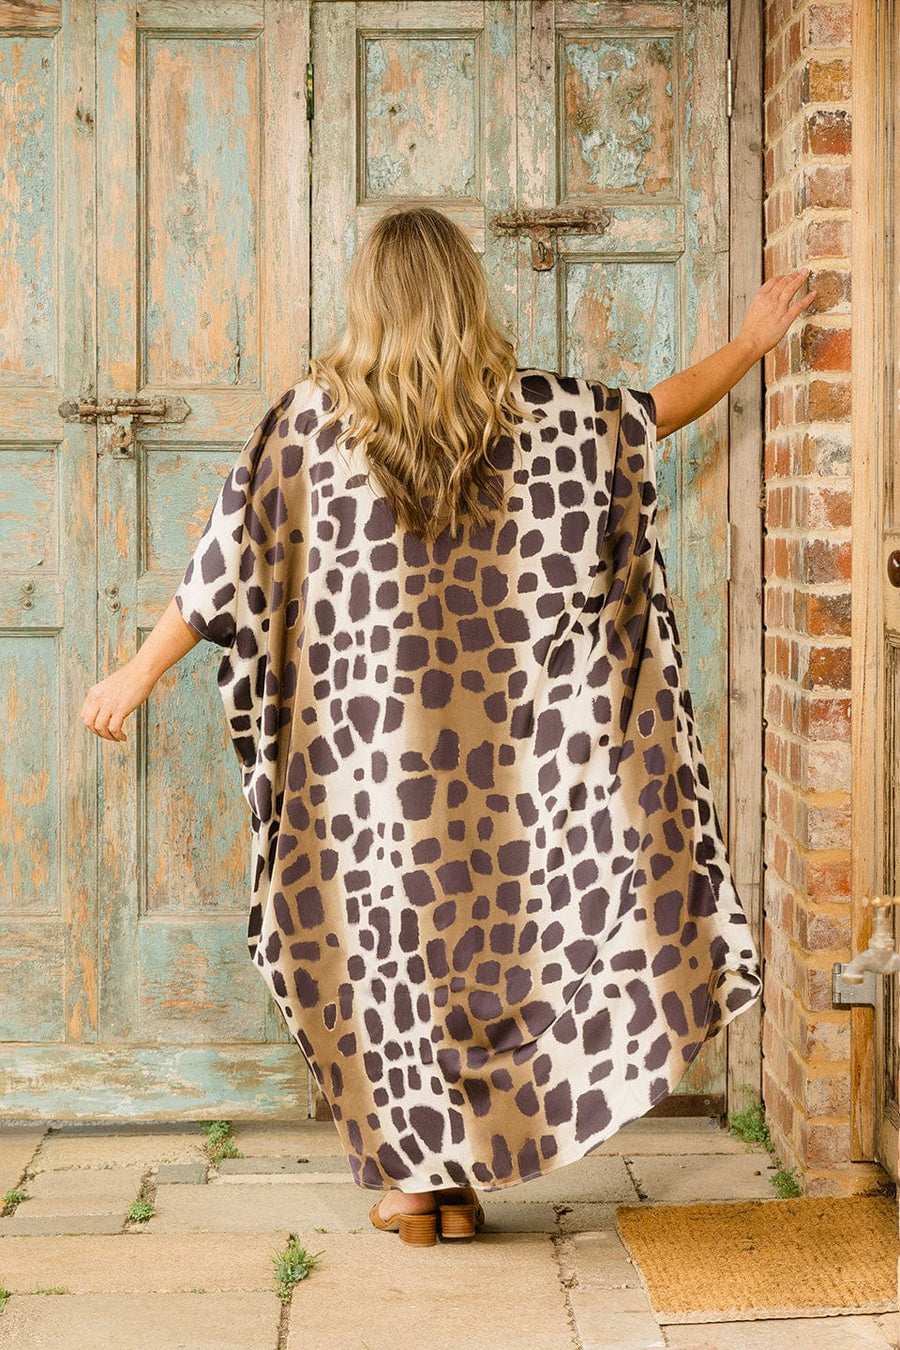 Seidiger Kimono mit Leopardenmuster